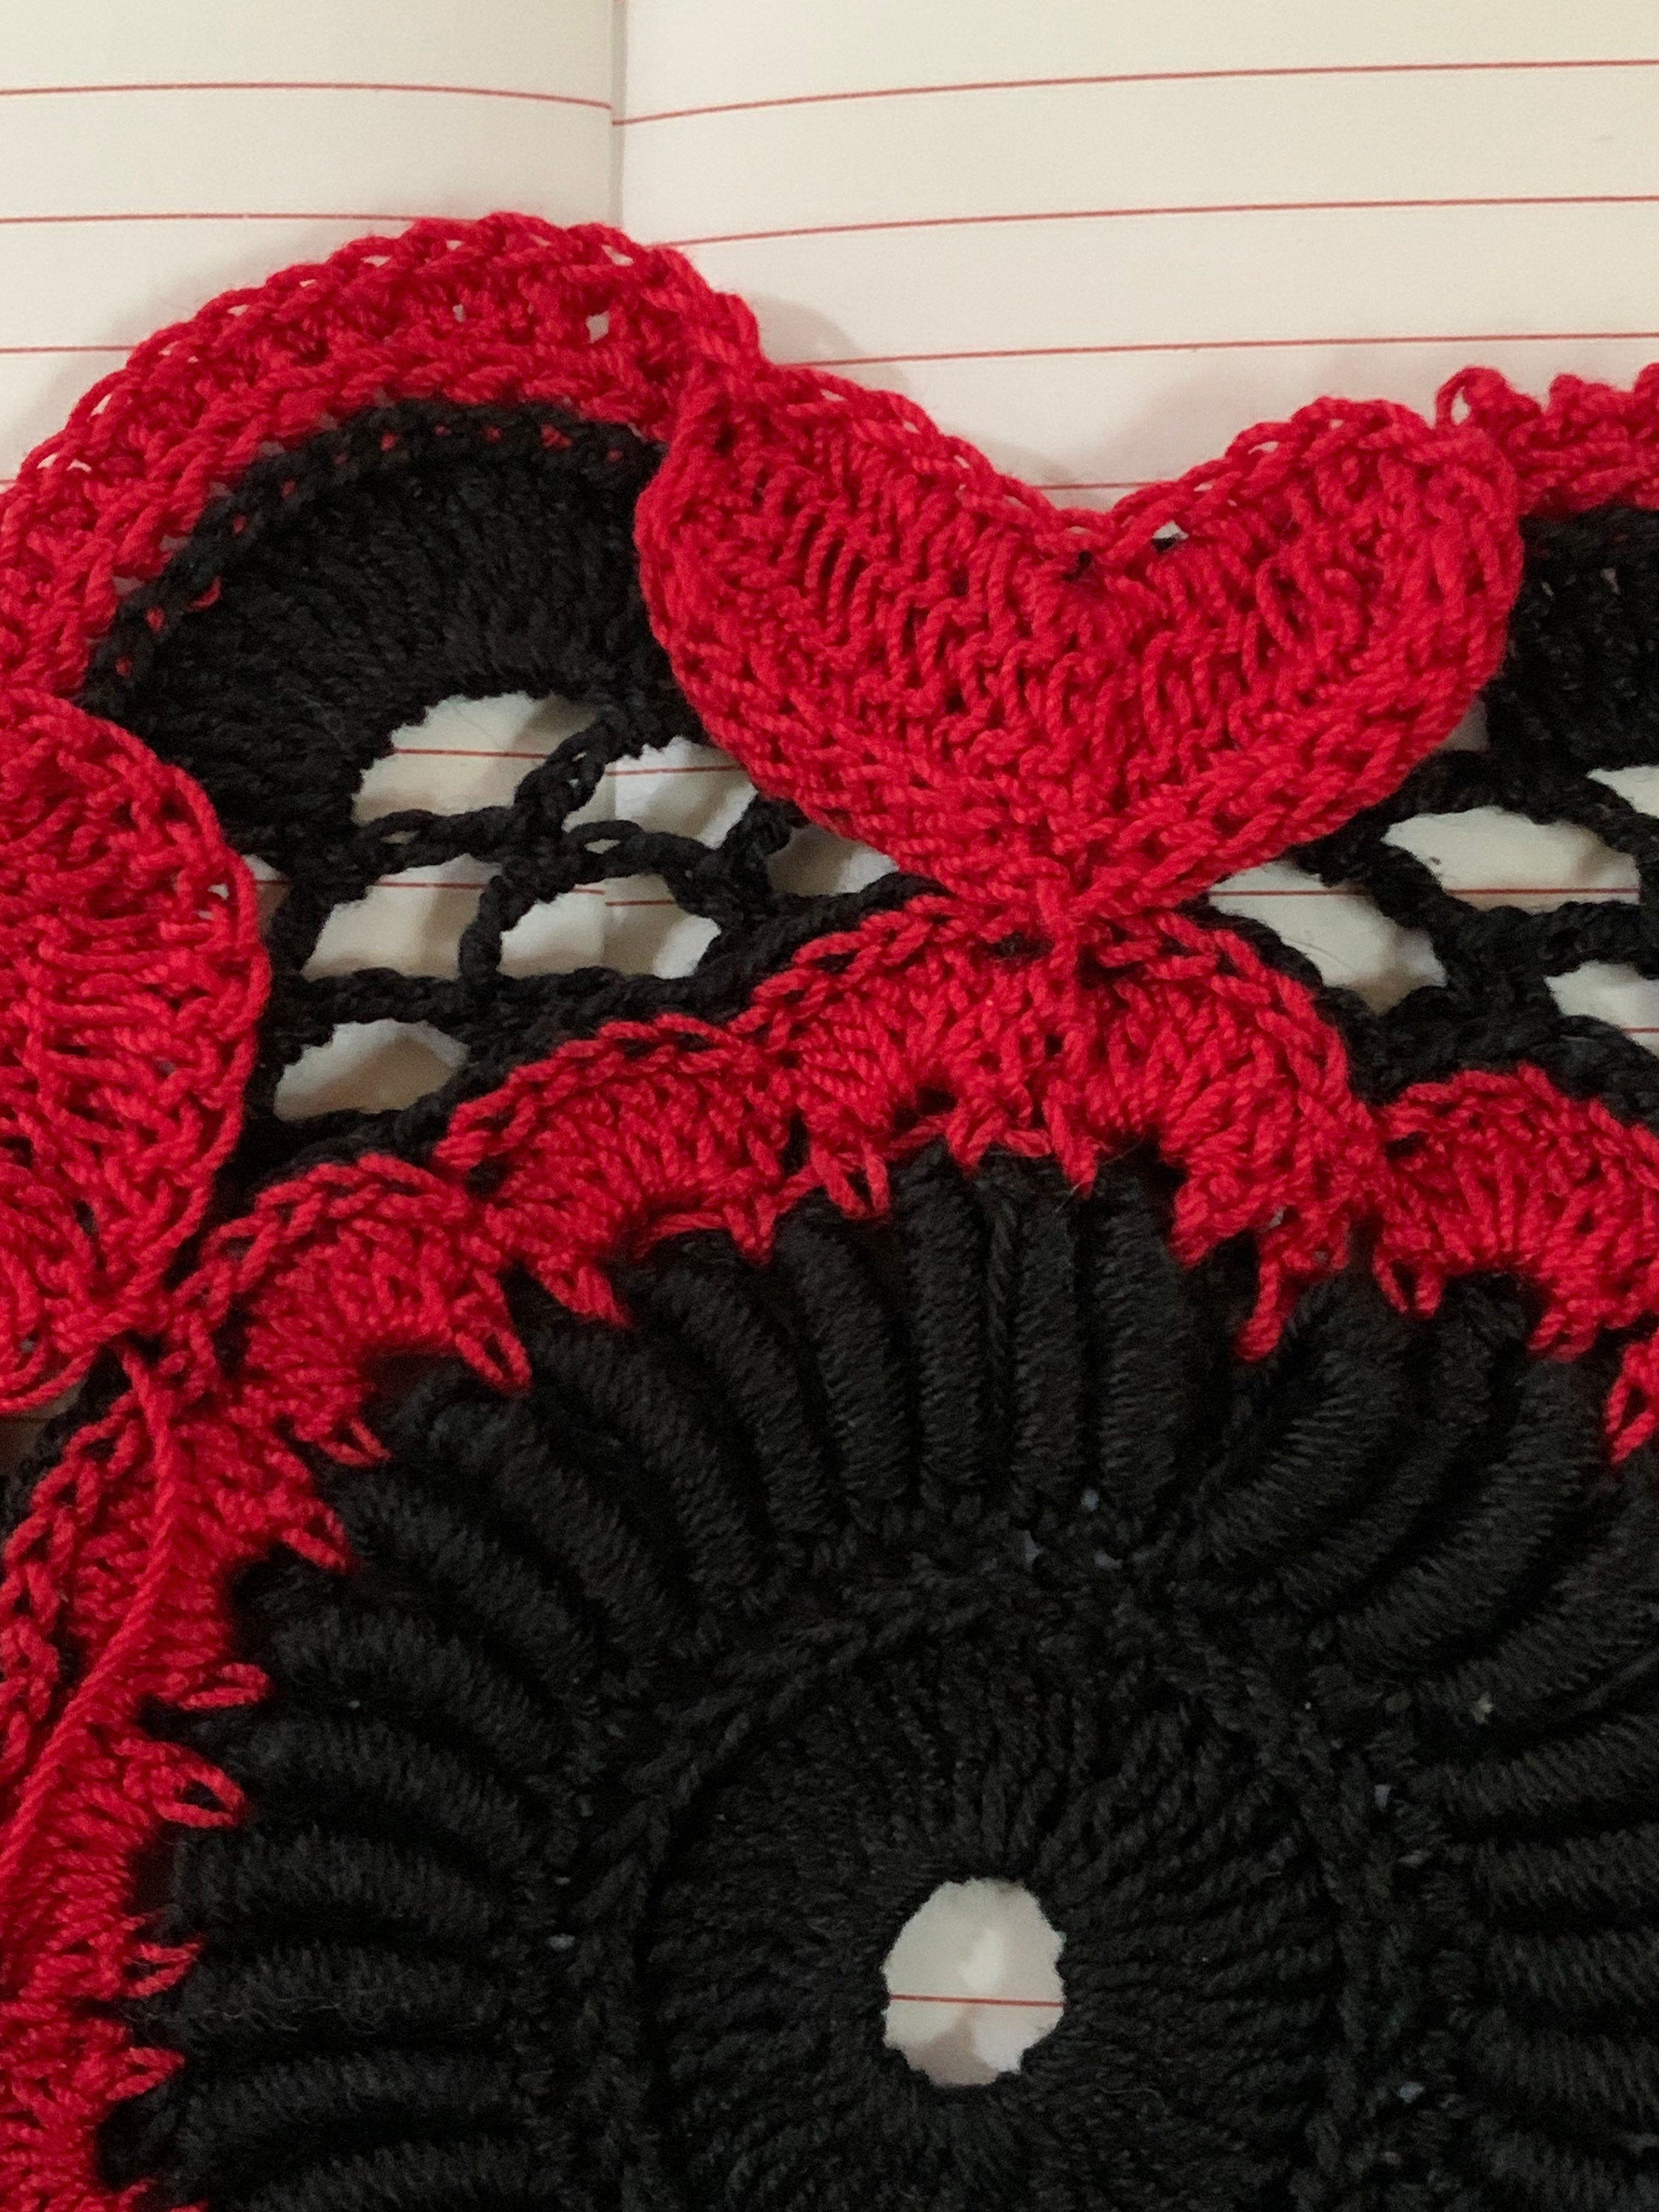 Digital Crochet Pattern for Be my Valentine Heart Doily-PDF Pattern-Instant Download